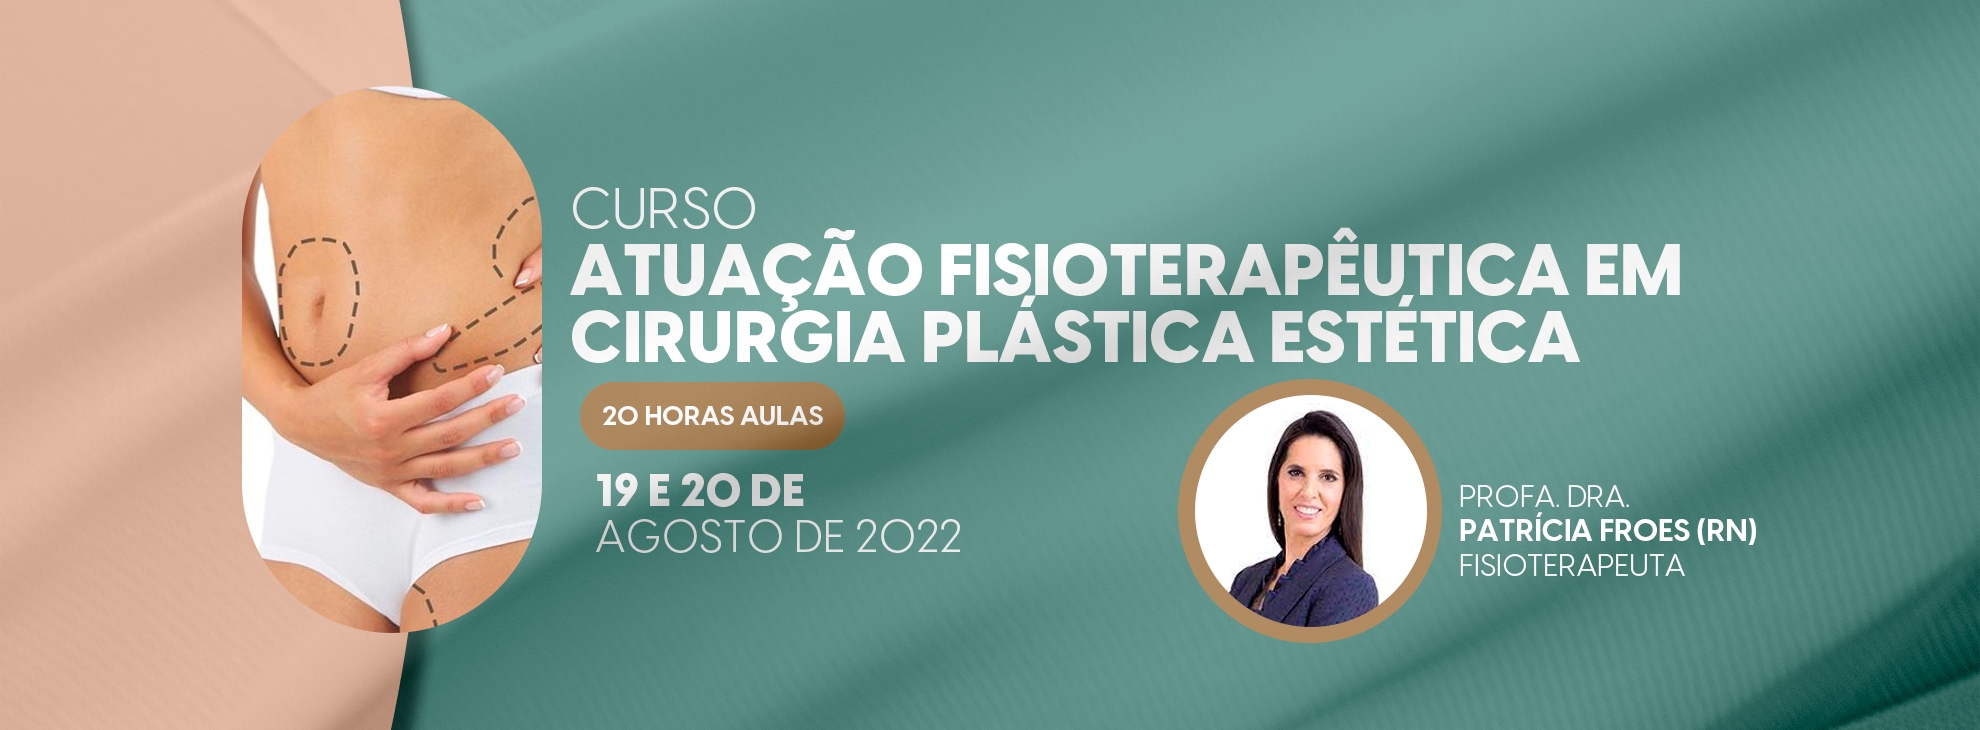 banner Atuacao Fisioterapeutica em Cirurgia Plastica Estetica 1